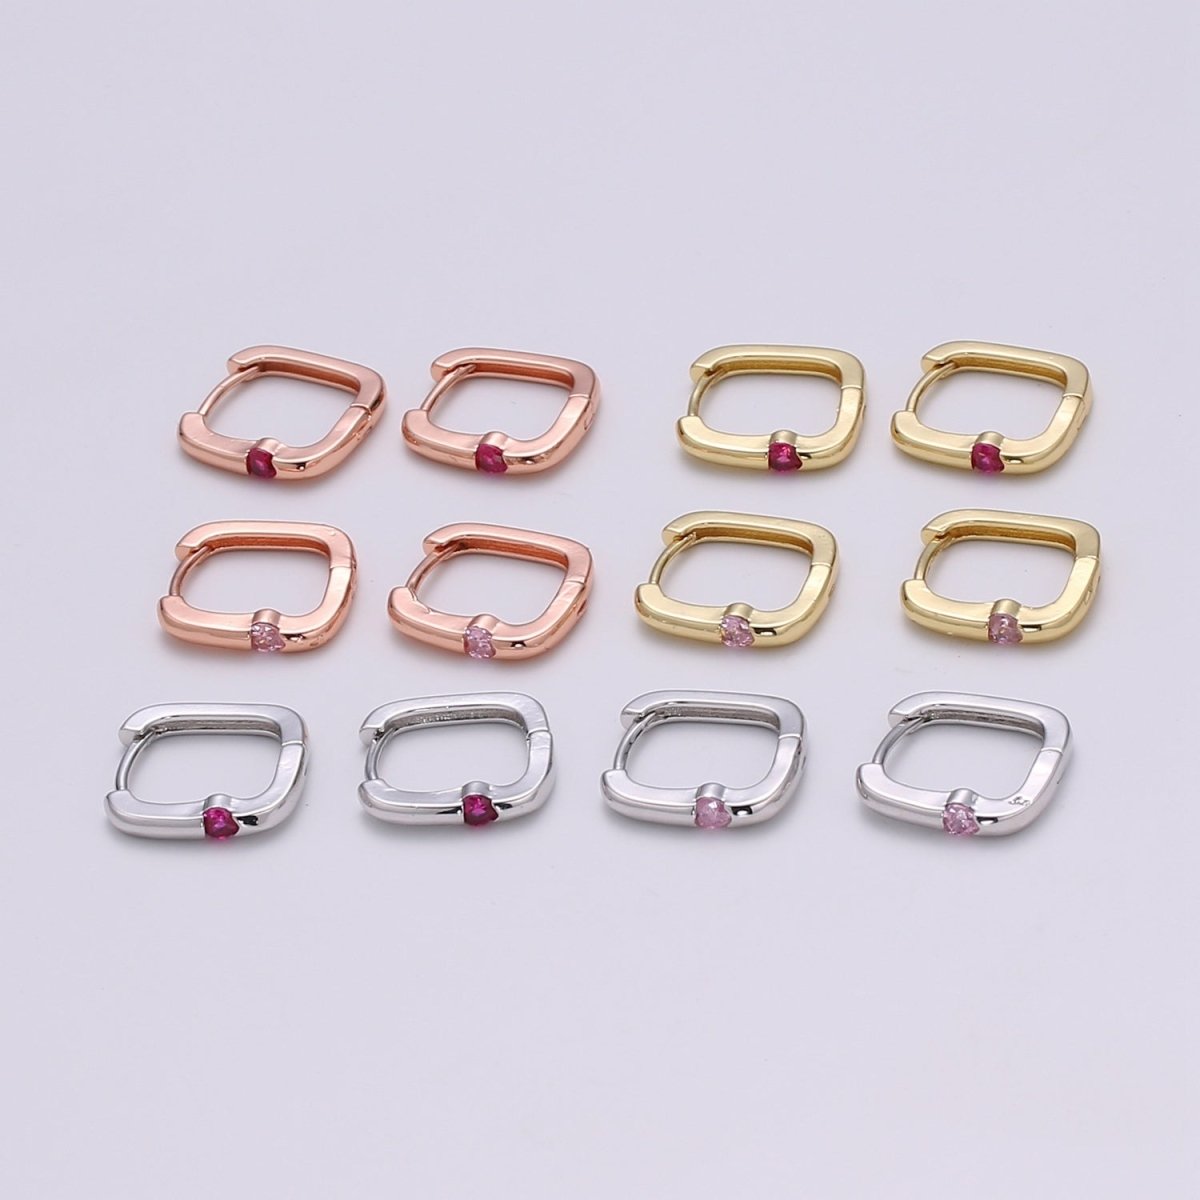 1x Square Hoop Earring with Cz , U-Shape Gold Hoops, 14k Gold Filled Huggie Earrings, Geometric Huggies, Oval Hoop earrings, Mini hoops. Q-505 - Q-510 - DLUXCA